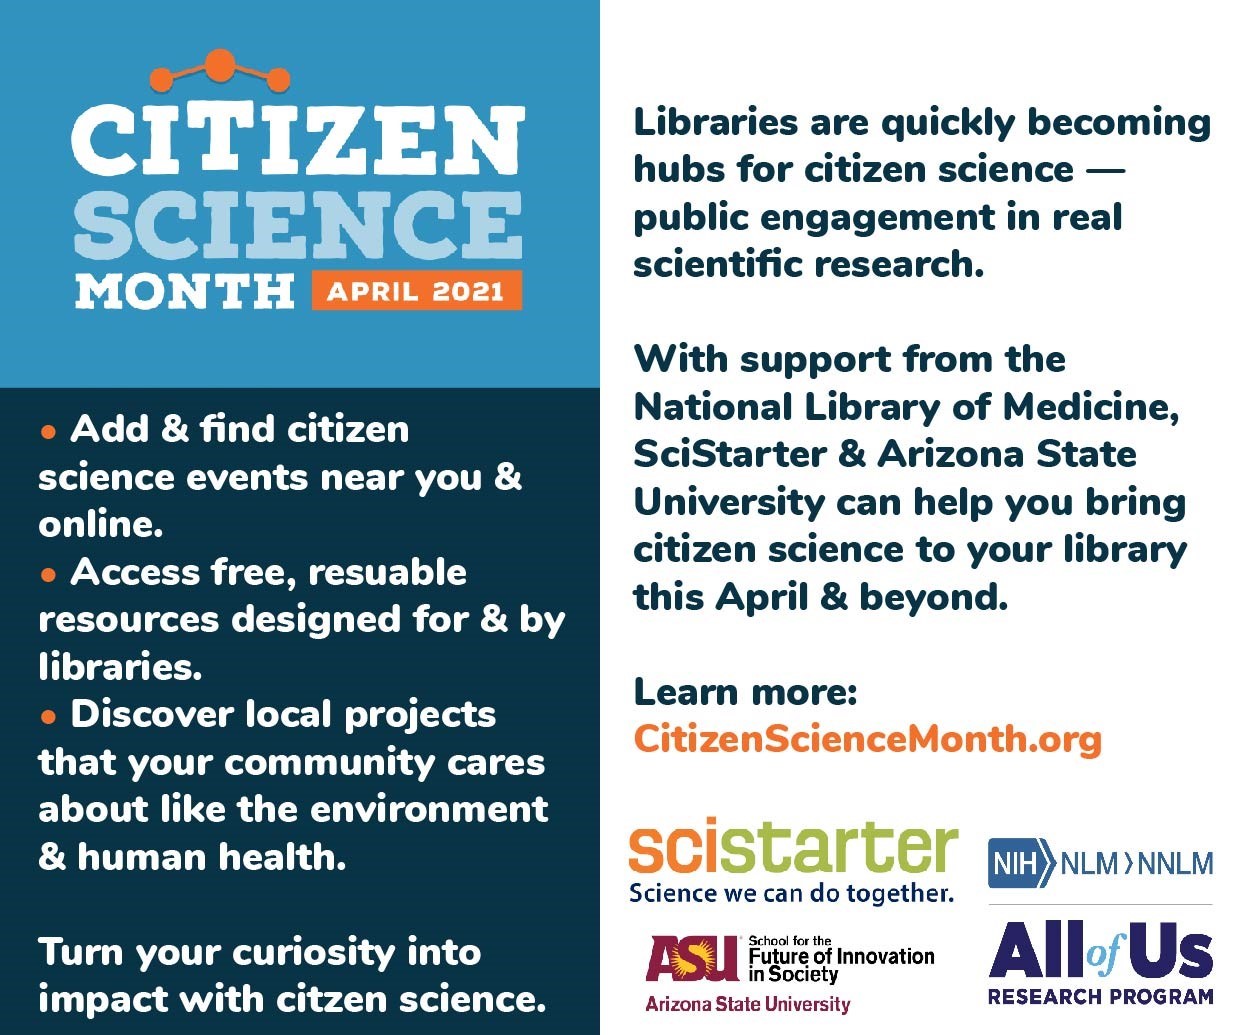 Advertisement for Citizen Science Month April 2021